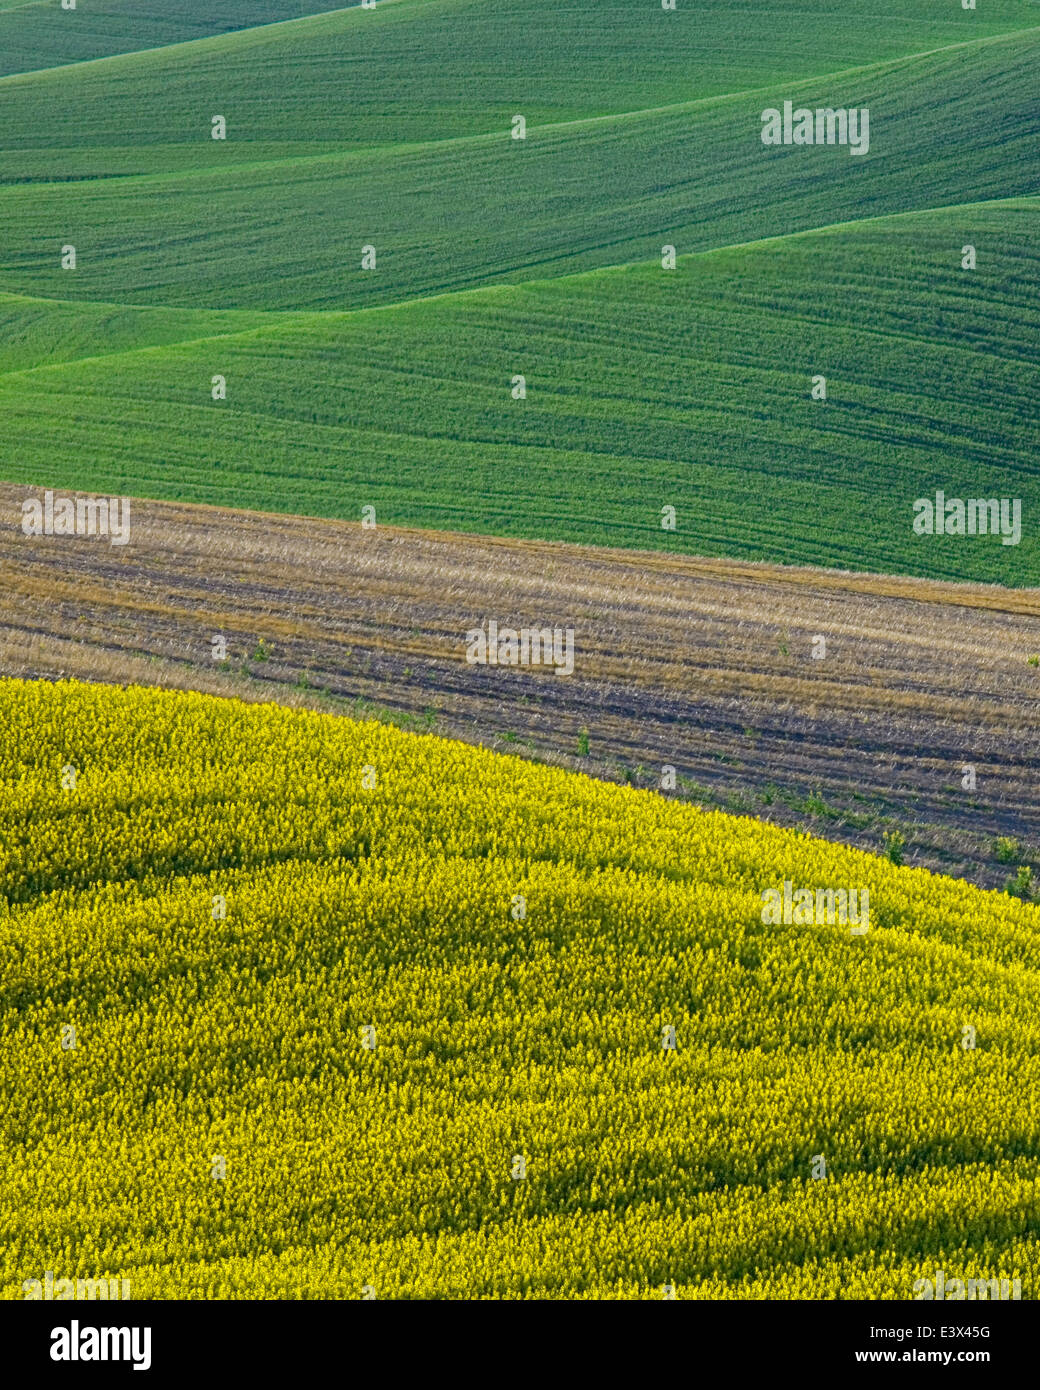 USA, Washington, Palouse, Whitman County, Canola fields and wheat Stock Photo